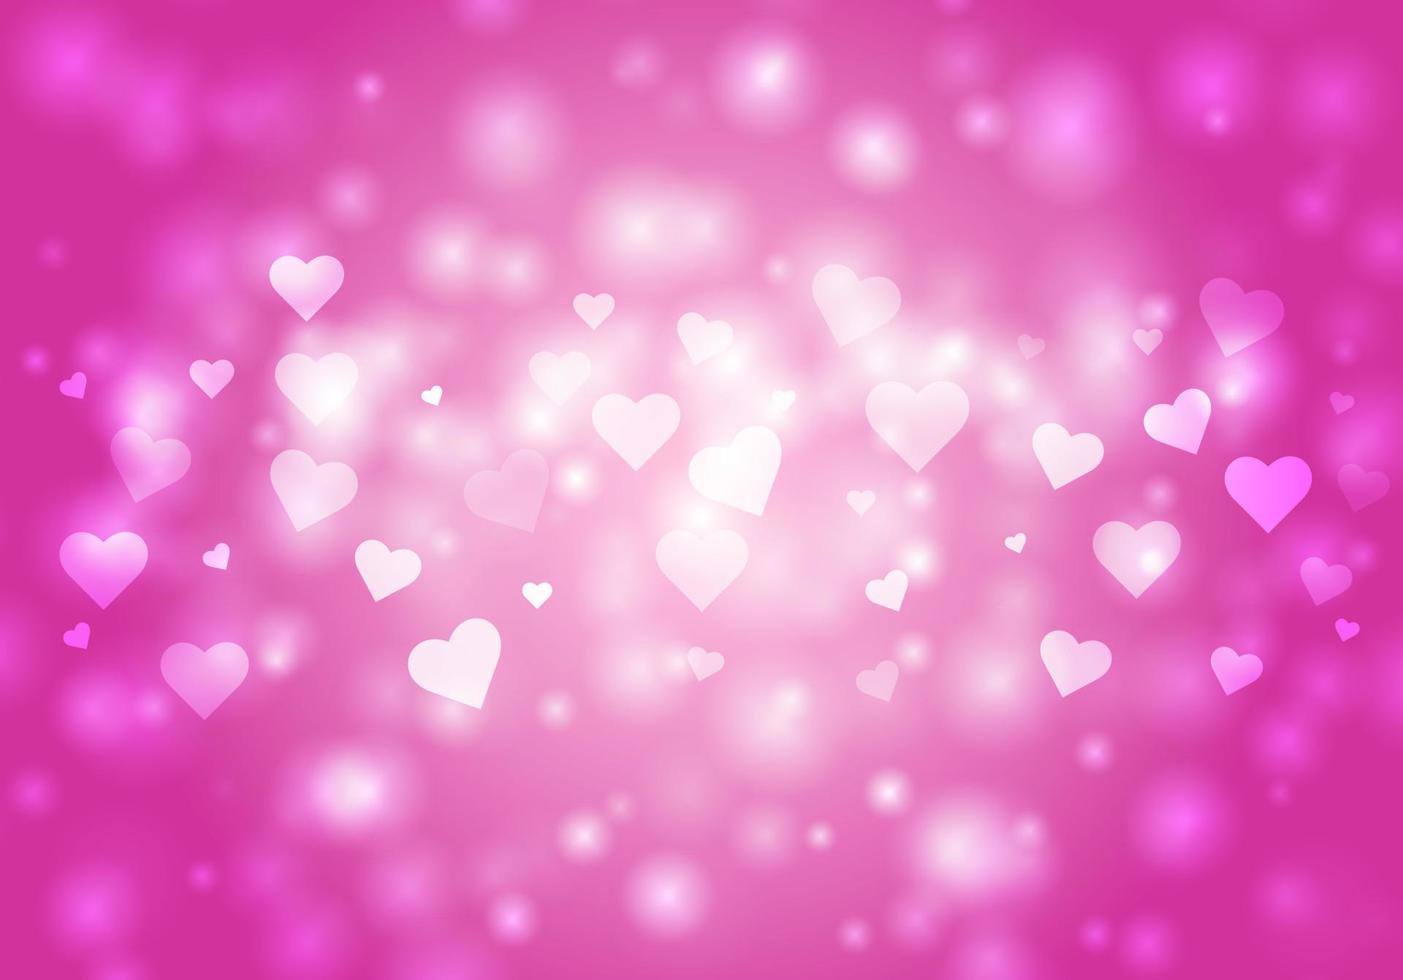 fondo rosa con corazones. día de san valentín relación amorosa evento festivo concepto festivo. ilustración vectorial vector